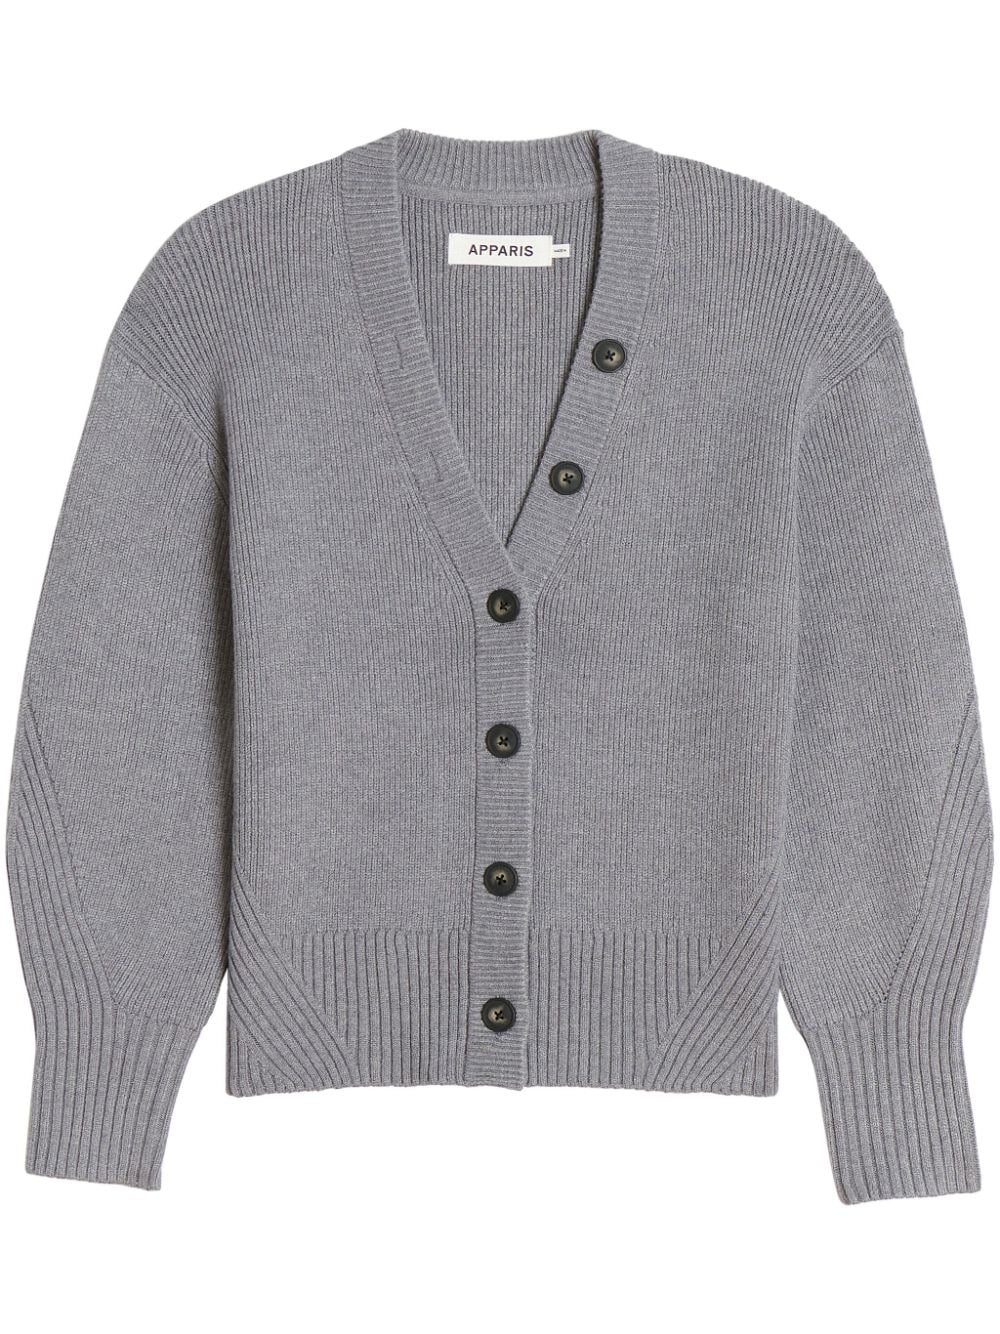 Apparis V-neck knit cardigan - Grey von Apparis